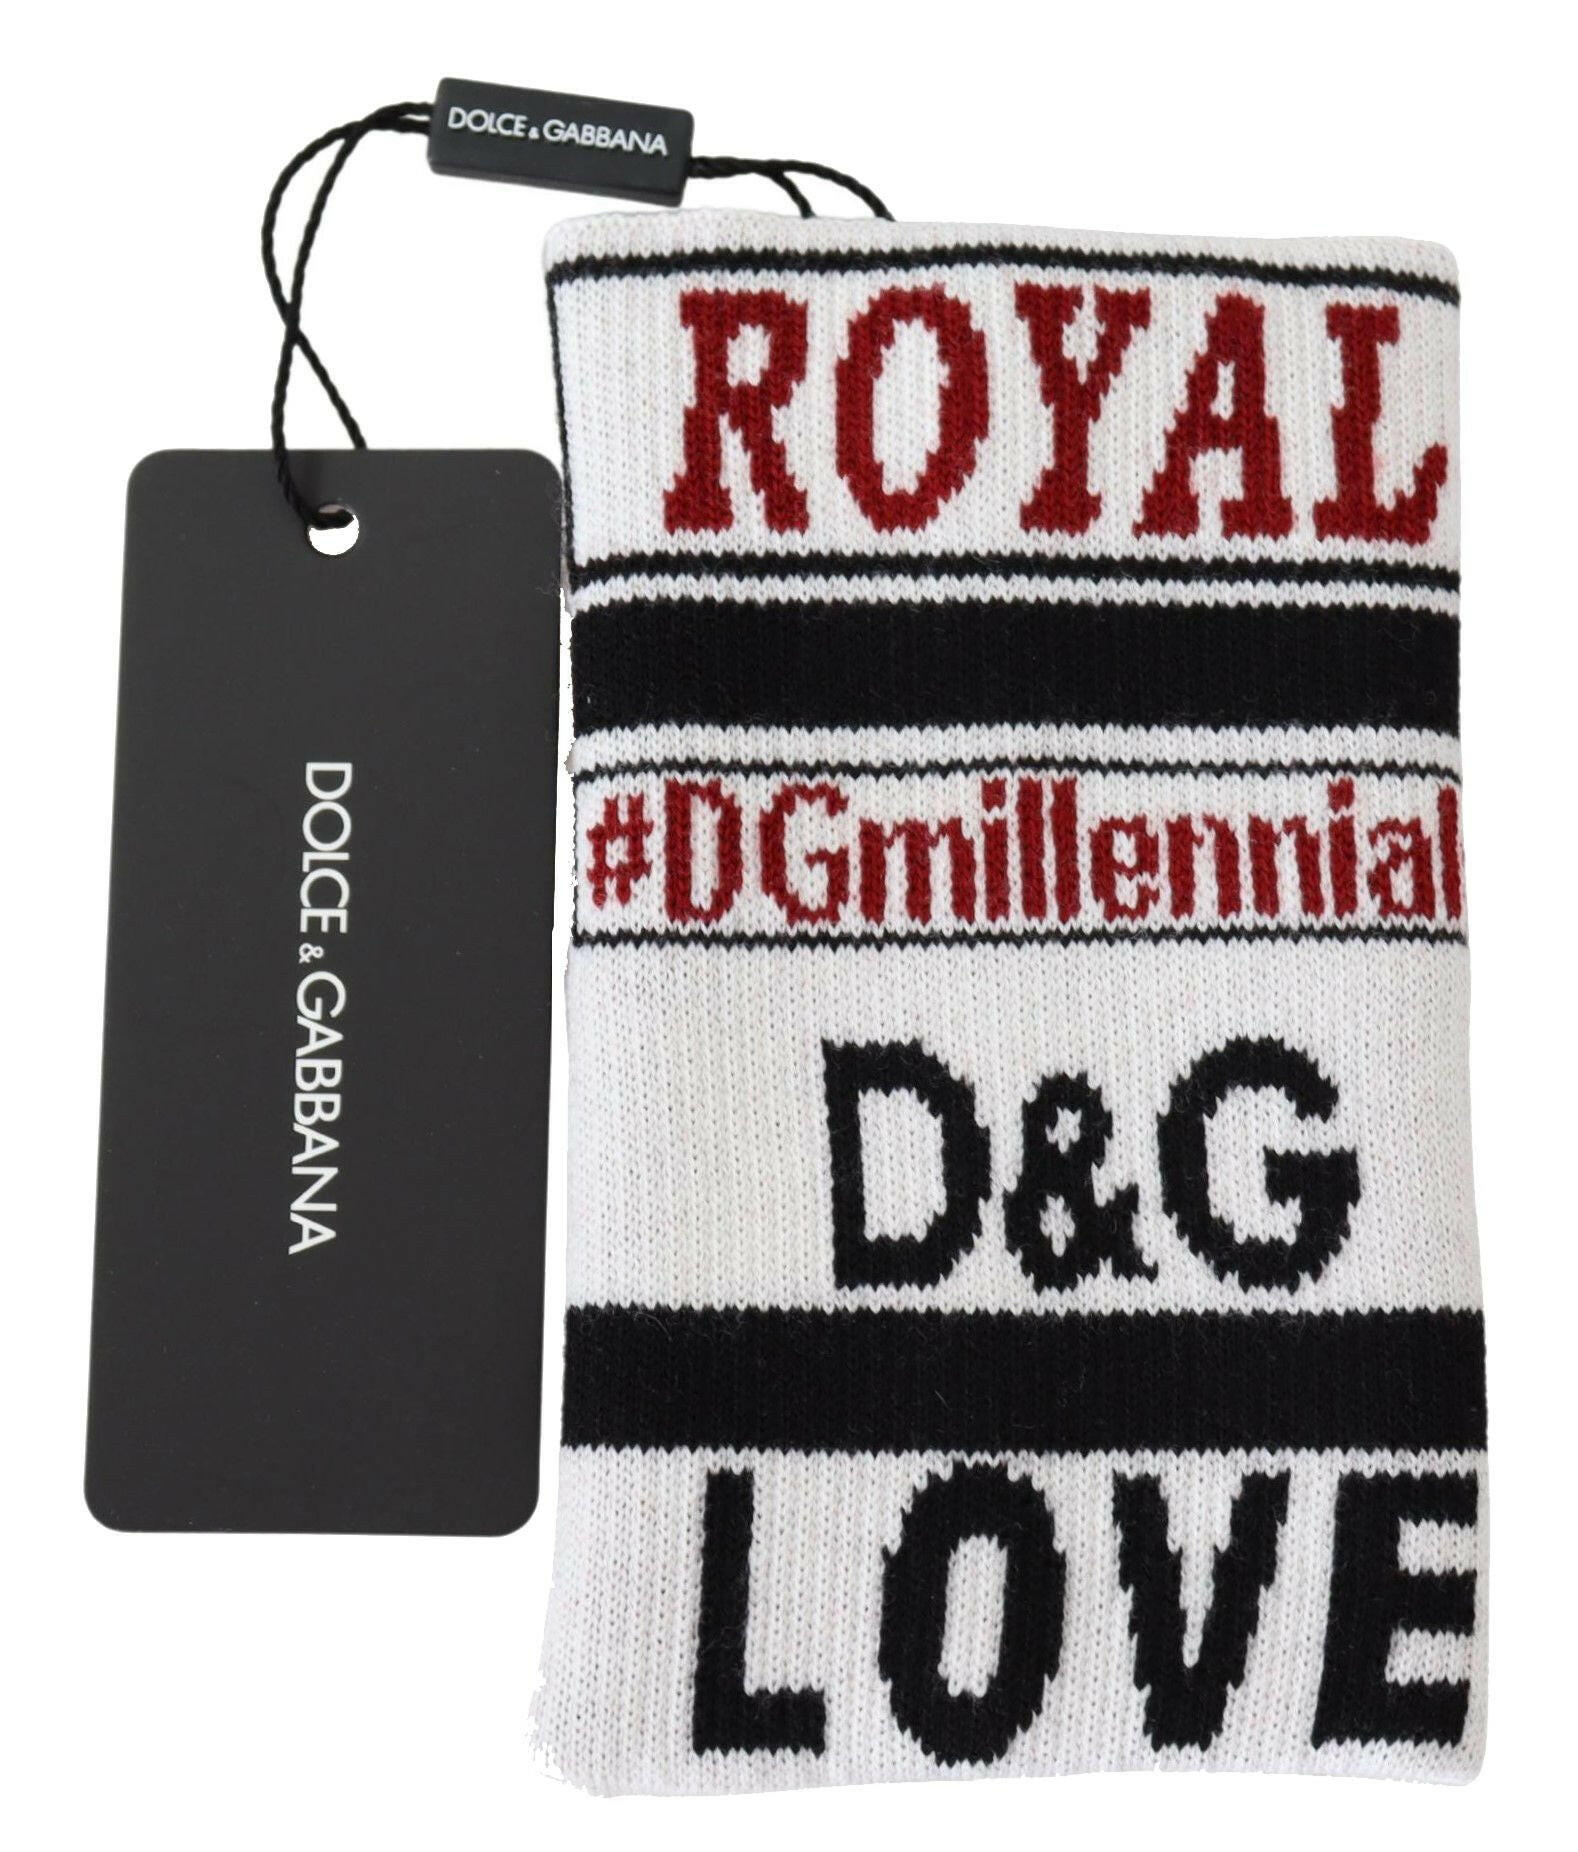 Dolce & Gabbana Multicolor Wool Knit D&G Love Wristband Wrap - GENUINE AUTHENTIC BRAND LLC  